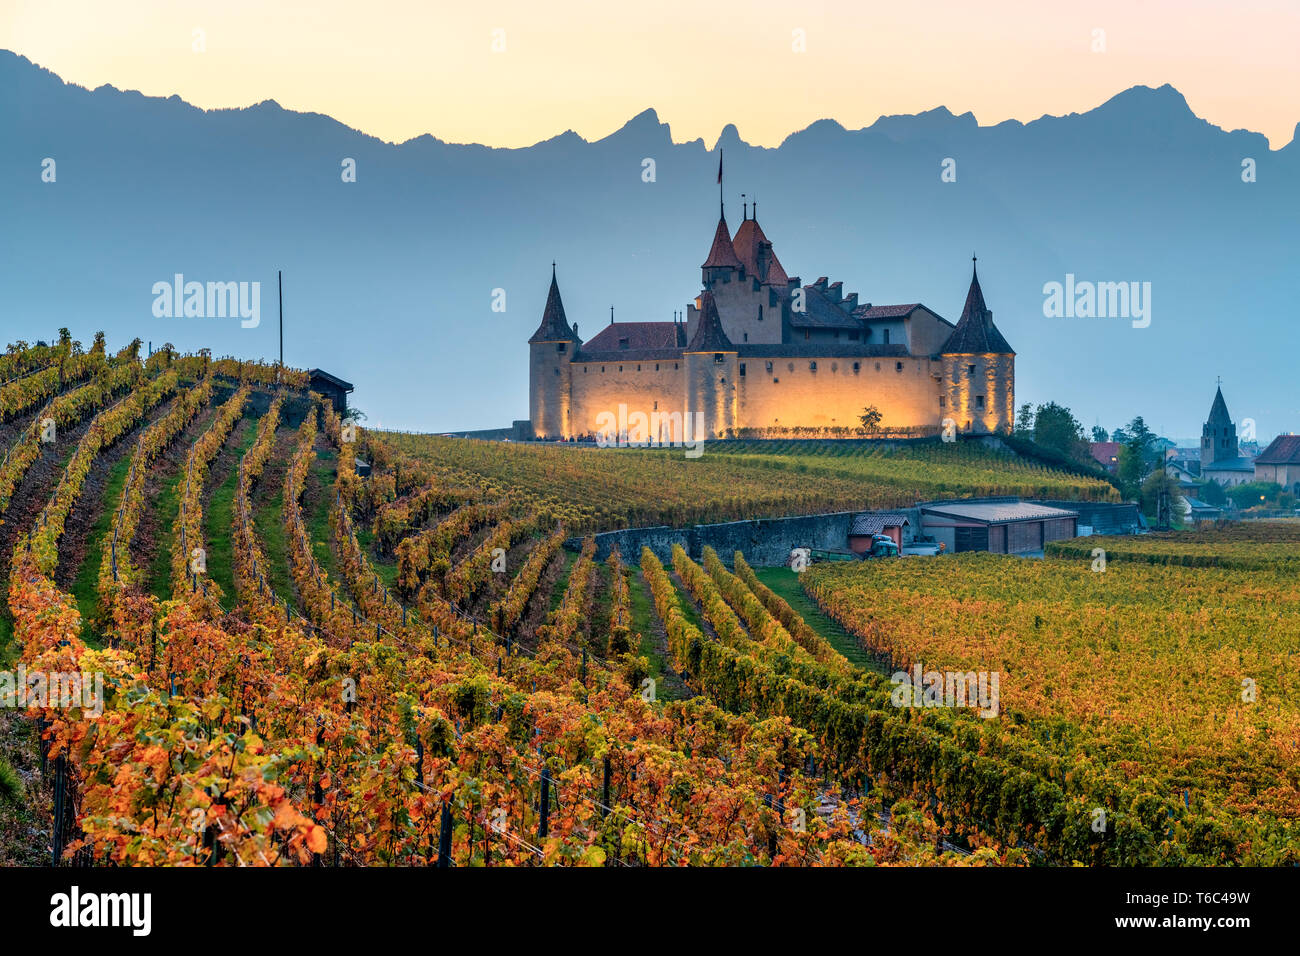 Burg von Aigle, Aigle, Kanton Waadt, Schweiz, Europa Stockfoto